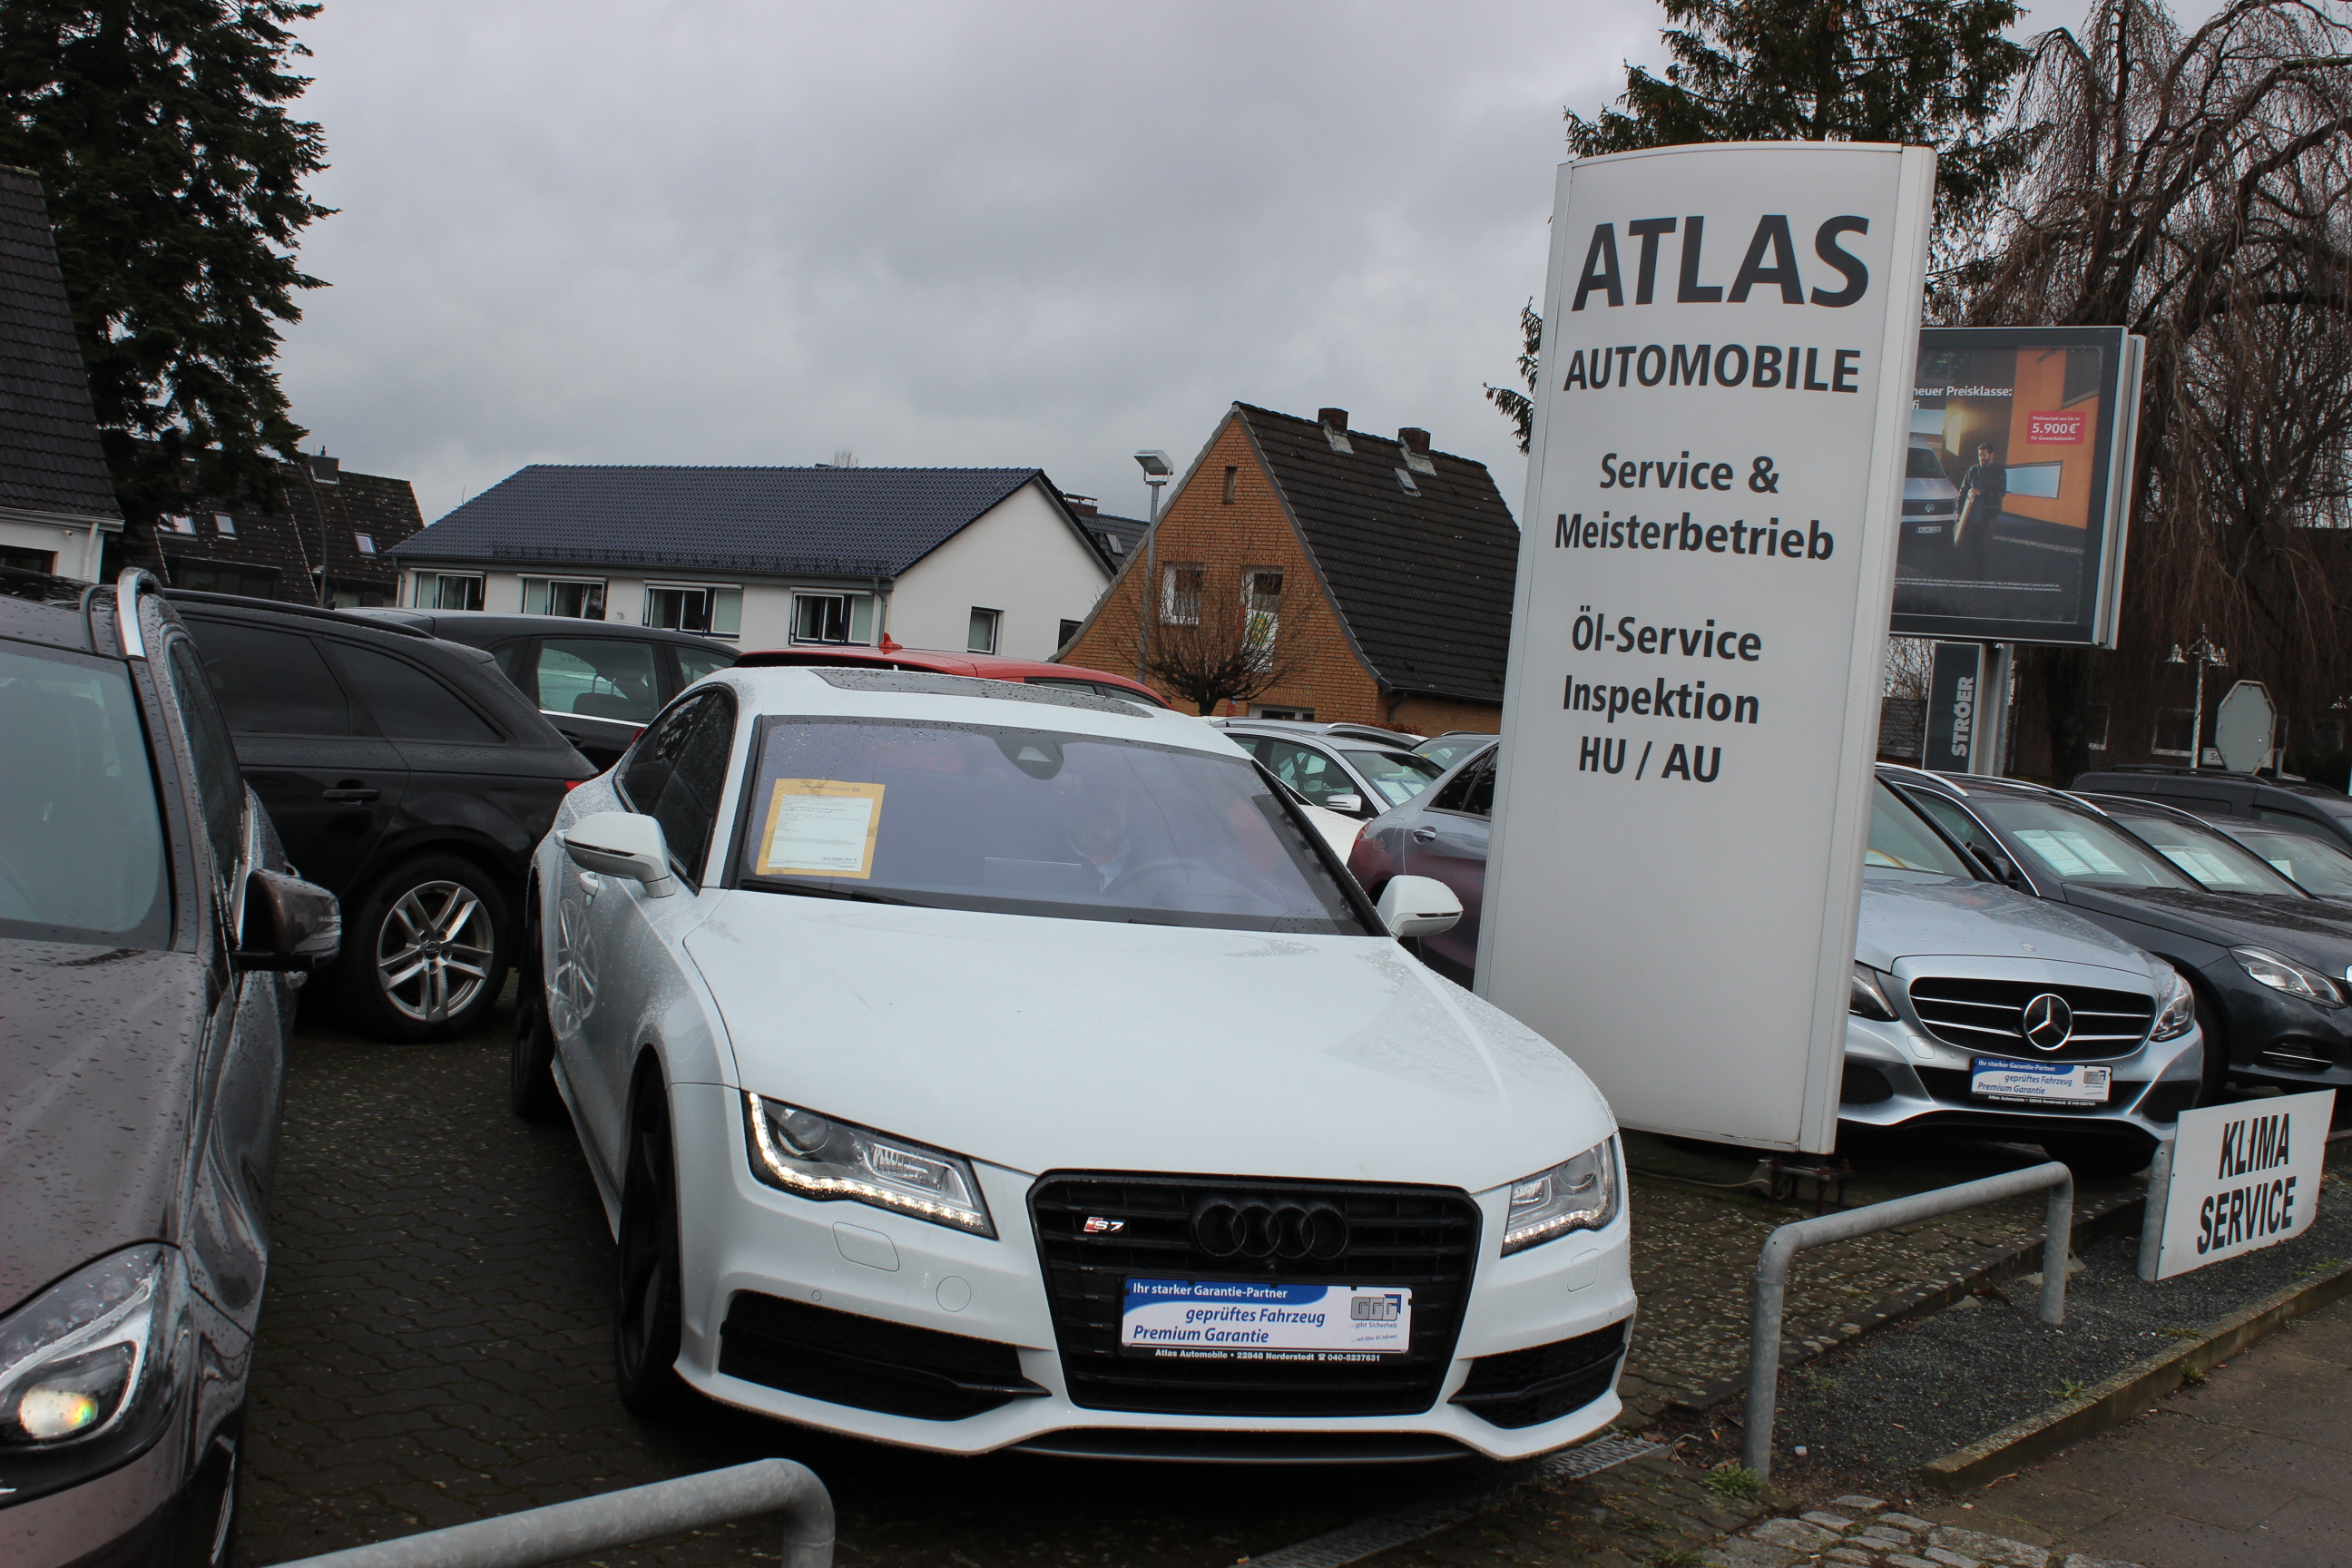 Atlas Automobile & Service logo